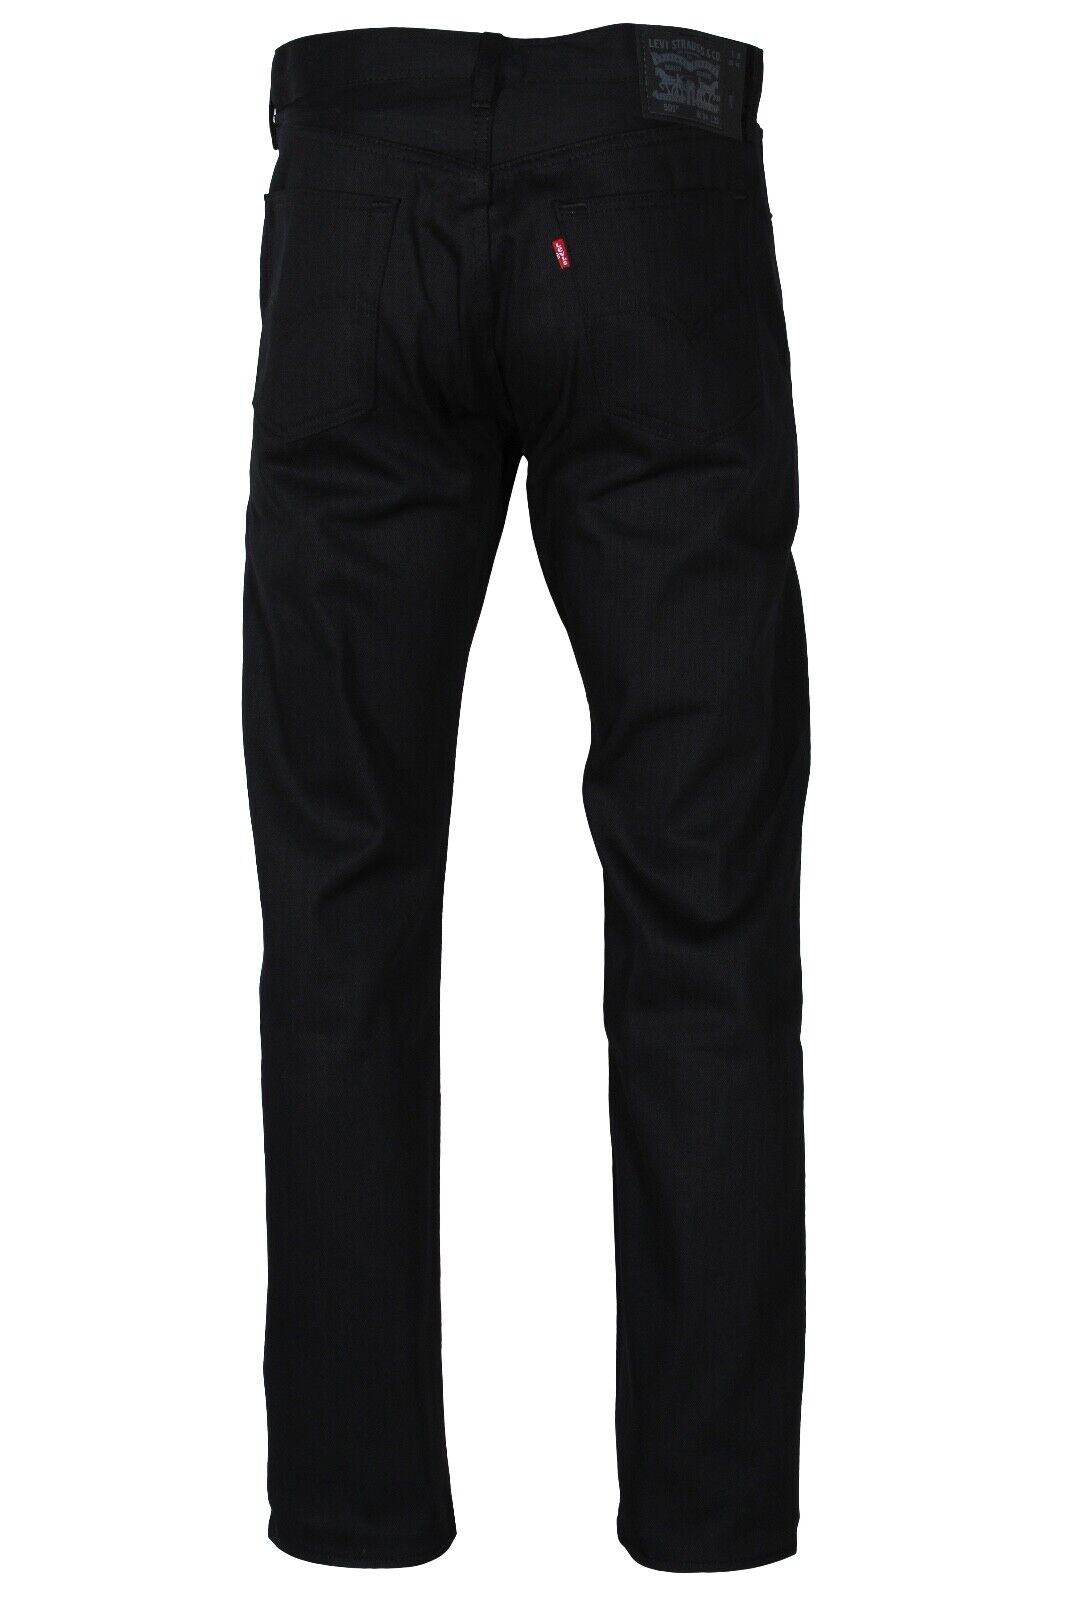 Levi’s 501 Original Shrink-to-Fit Men's Jeans in Modern Black Style# 00501-1582